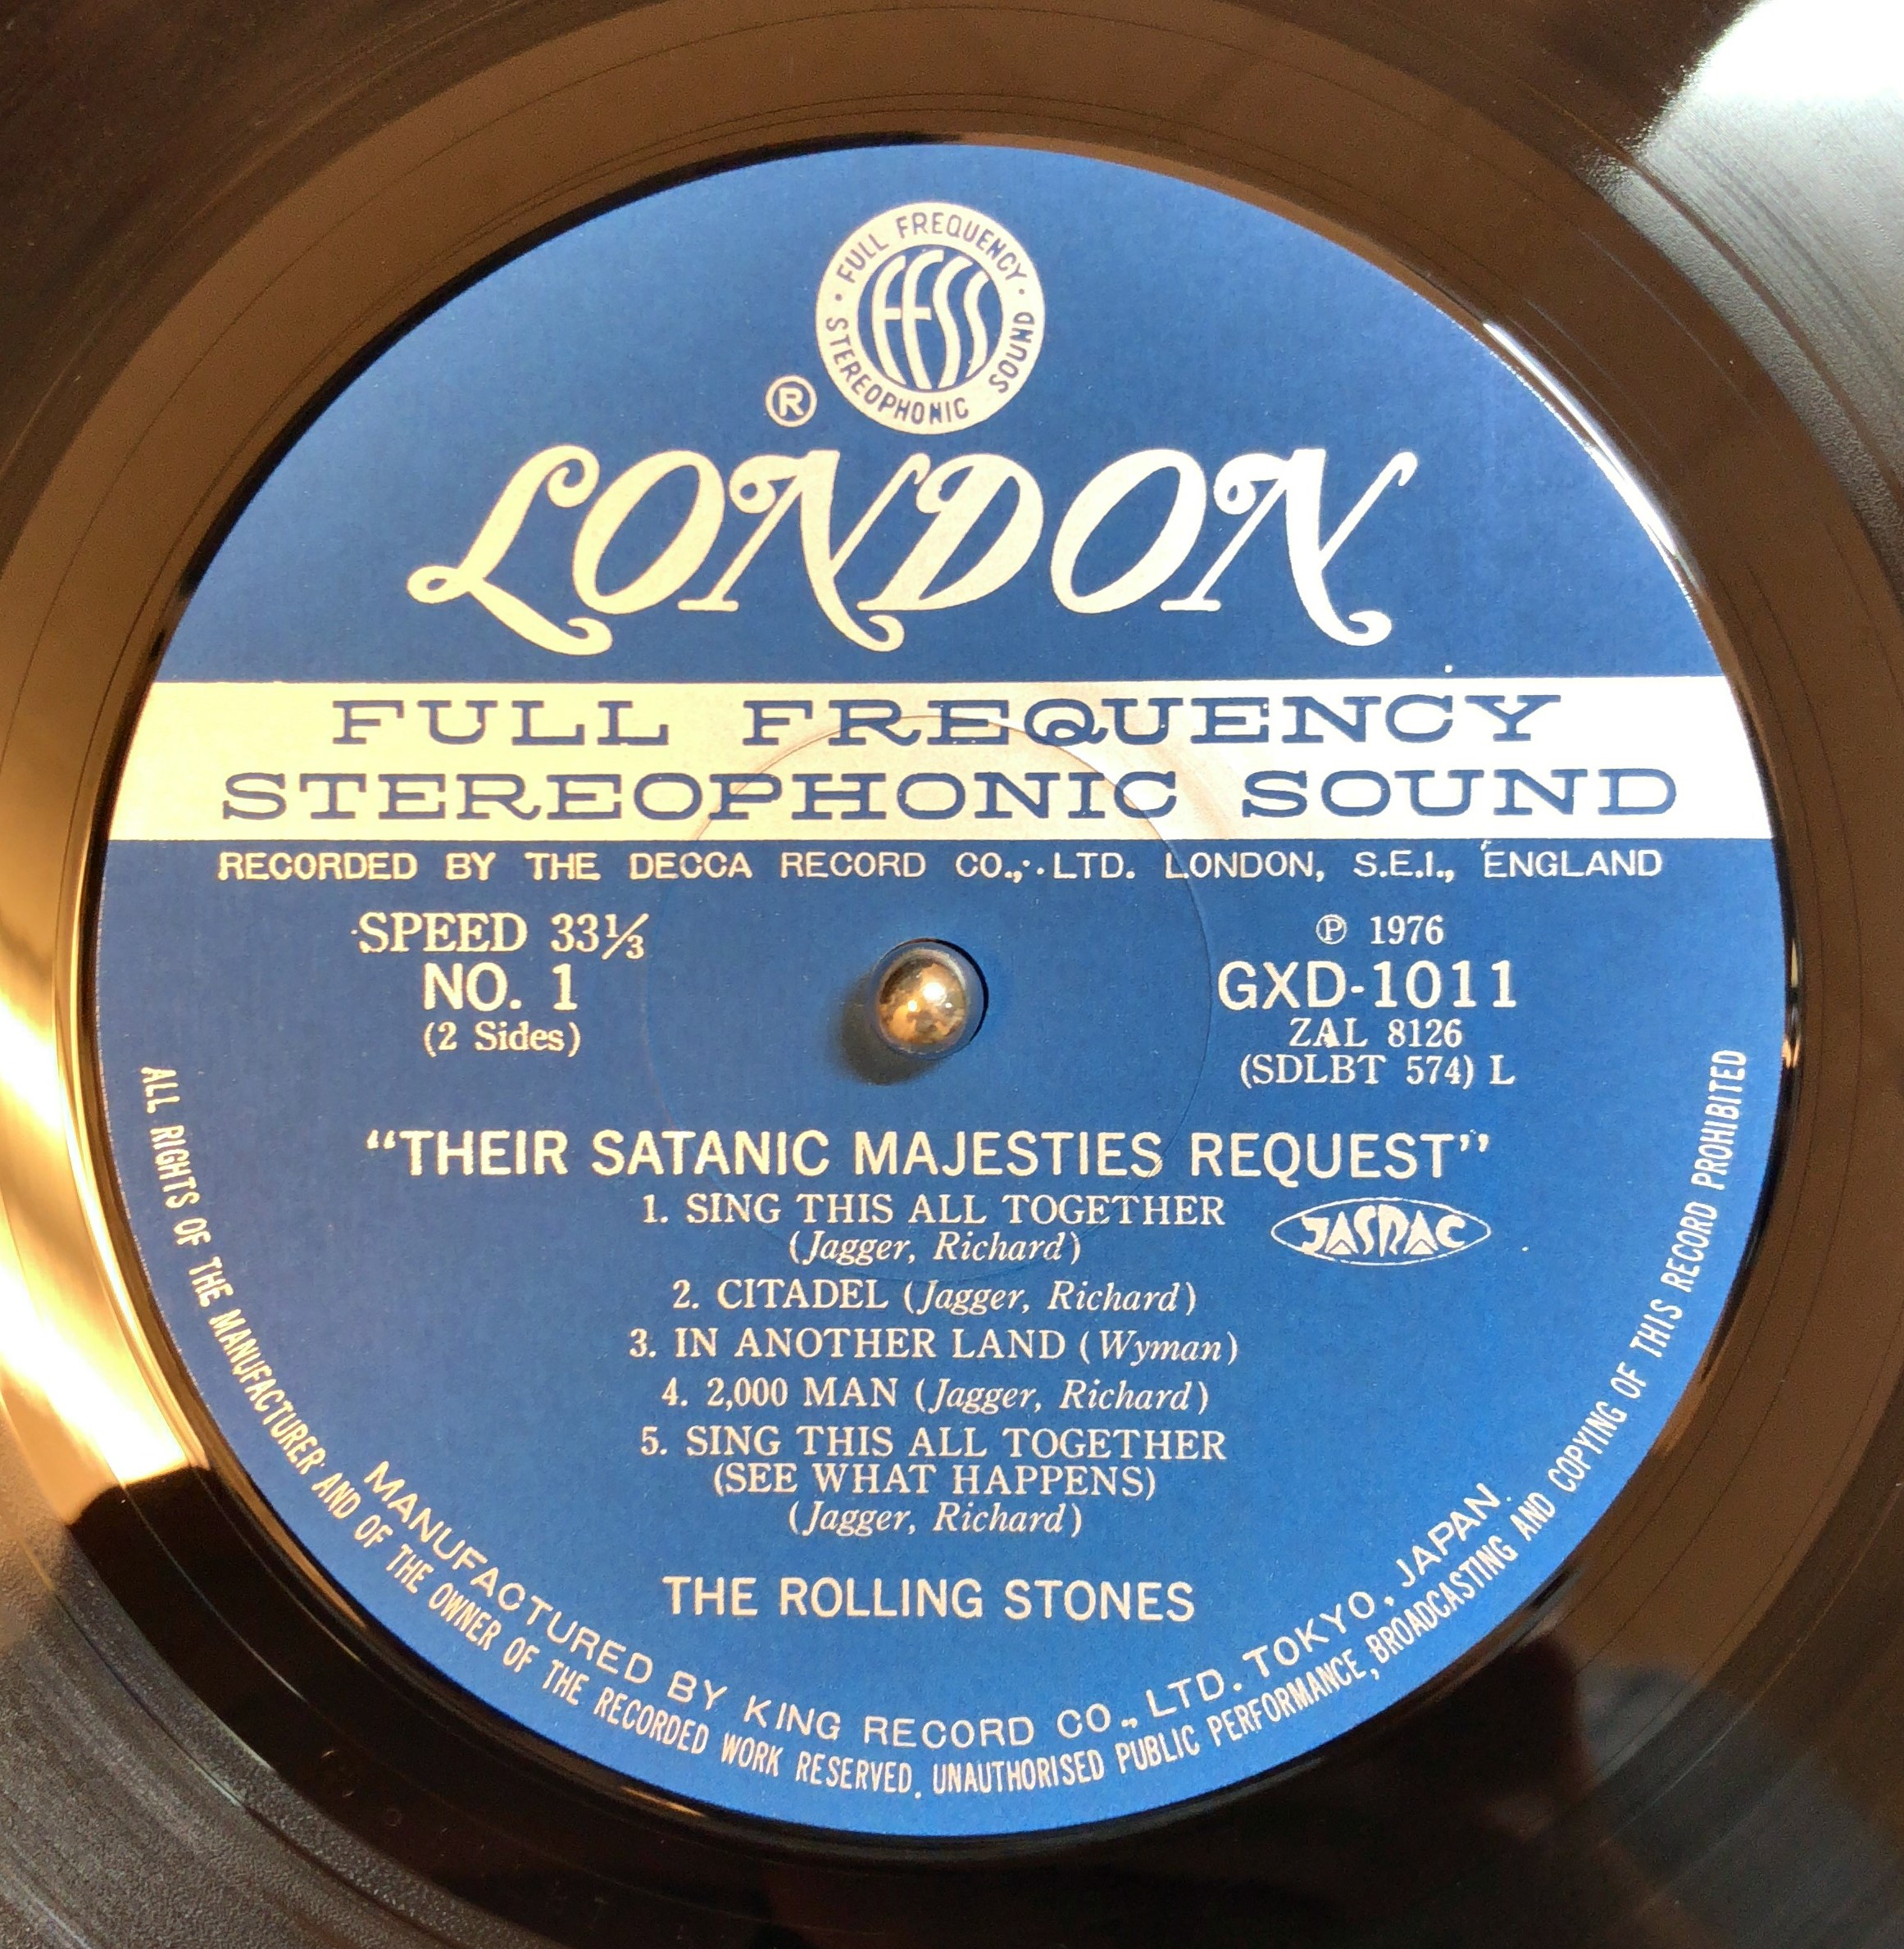 The Rolling Stones / Their Satanic Majesties Request | 中古レコード通販・買取のアカル・レコーズ